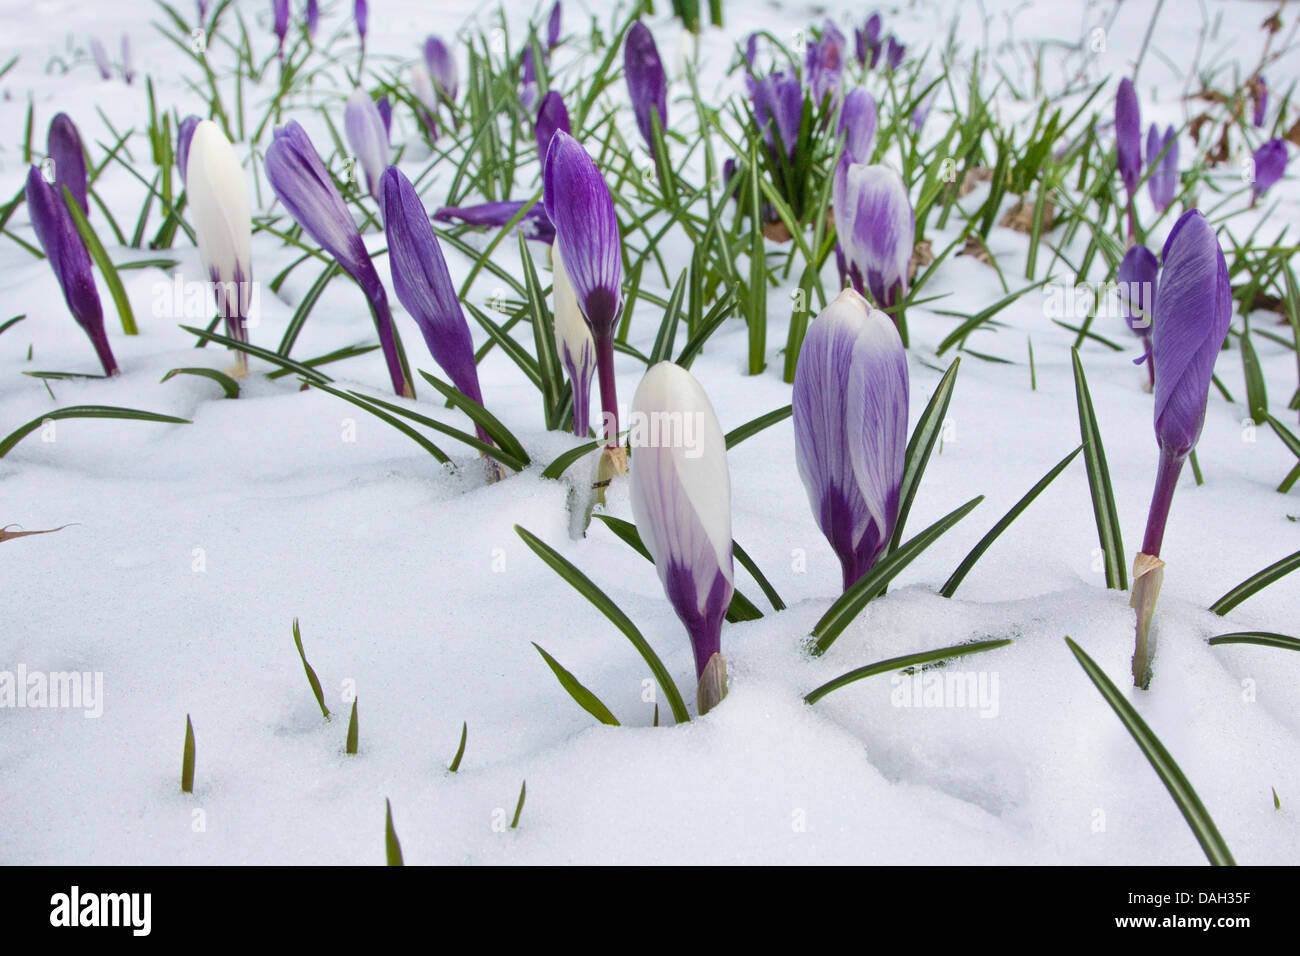 Dutch crocus, spring crocus (Crocus vernus, Crocus neapolitanus), blooming in snow, Germany Stock Photo